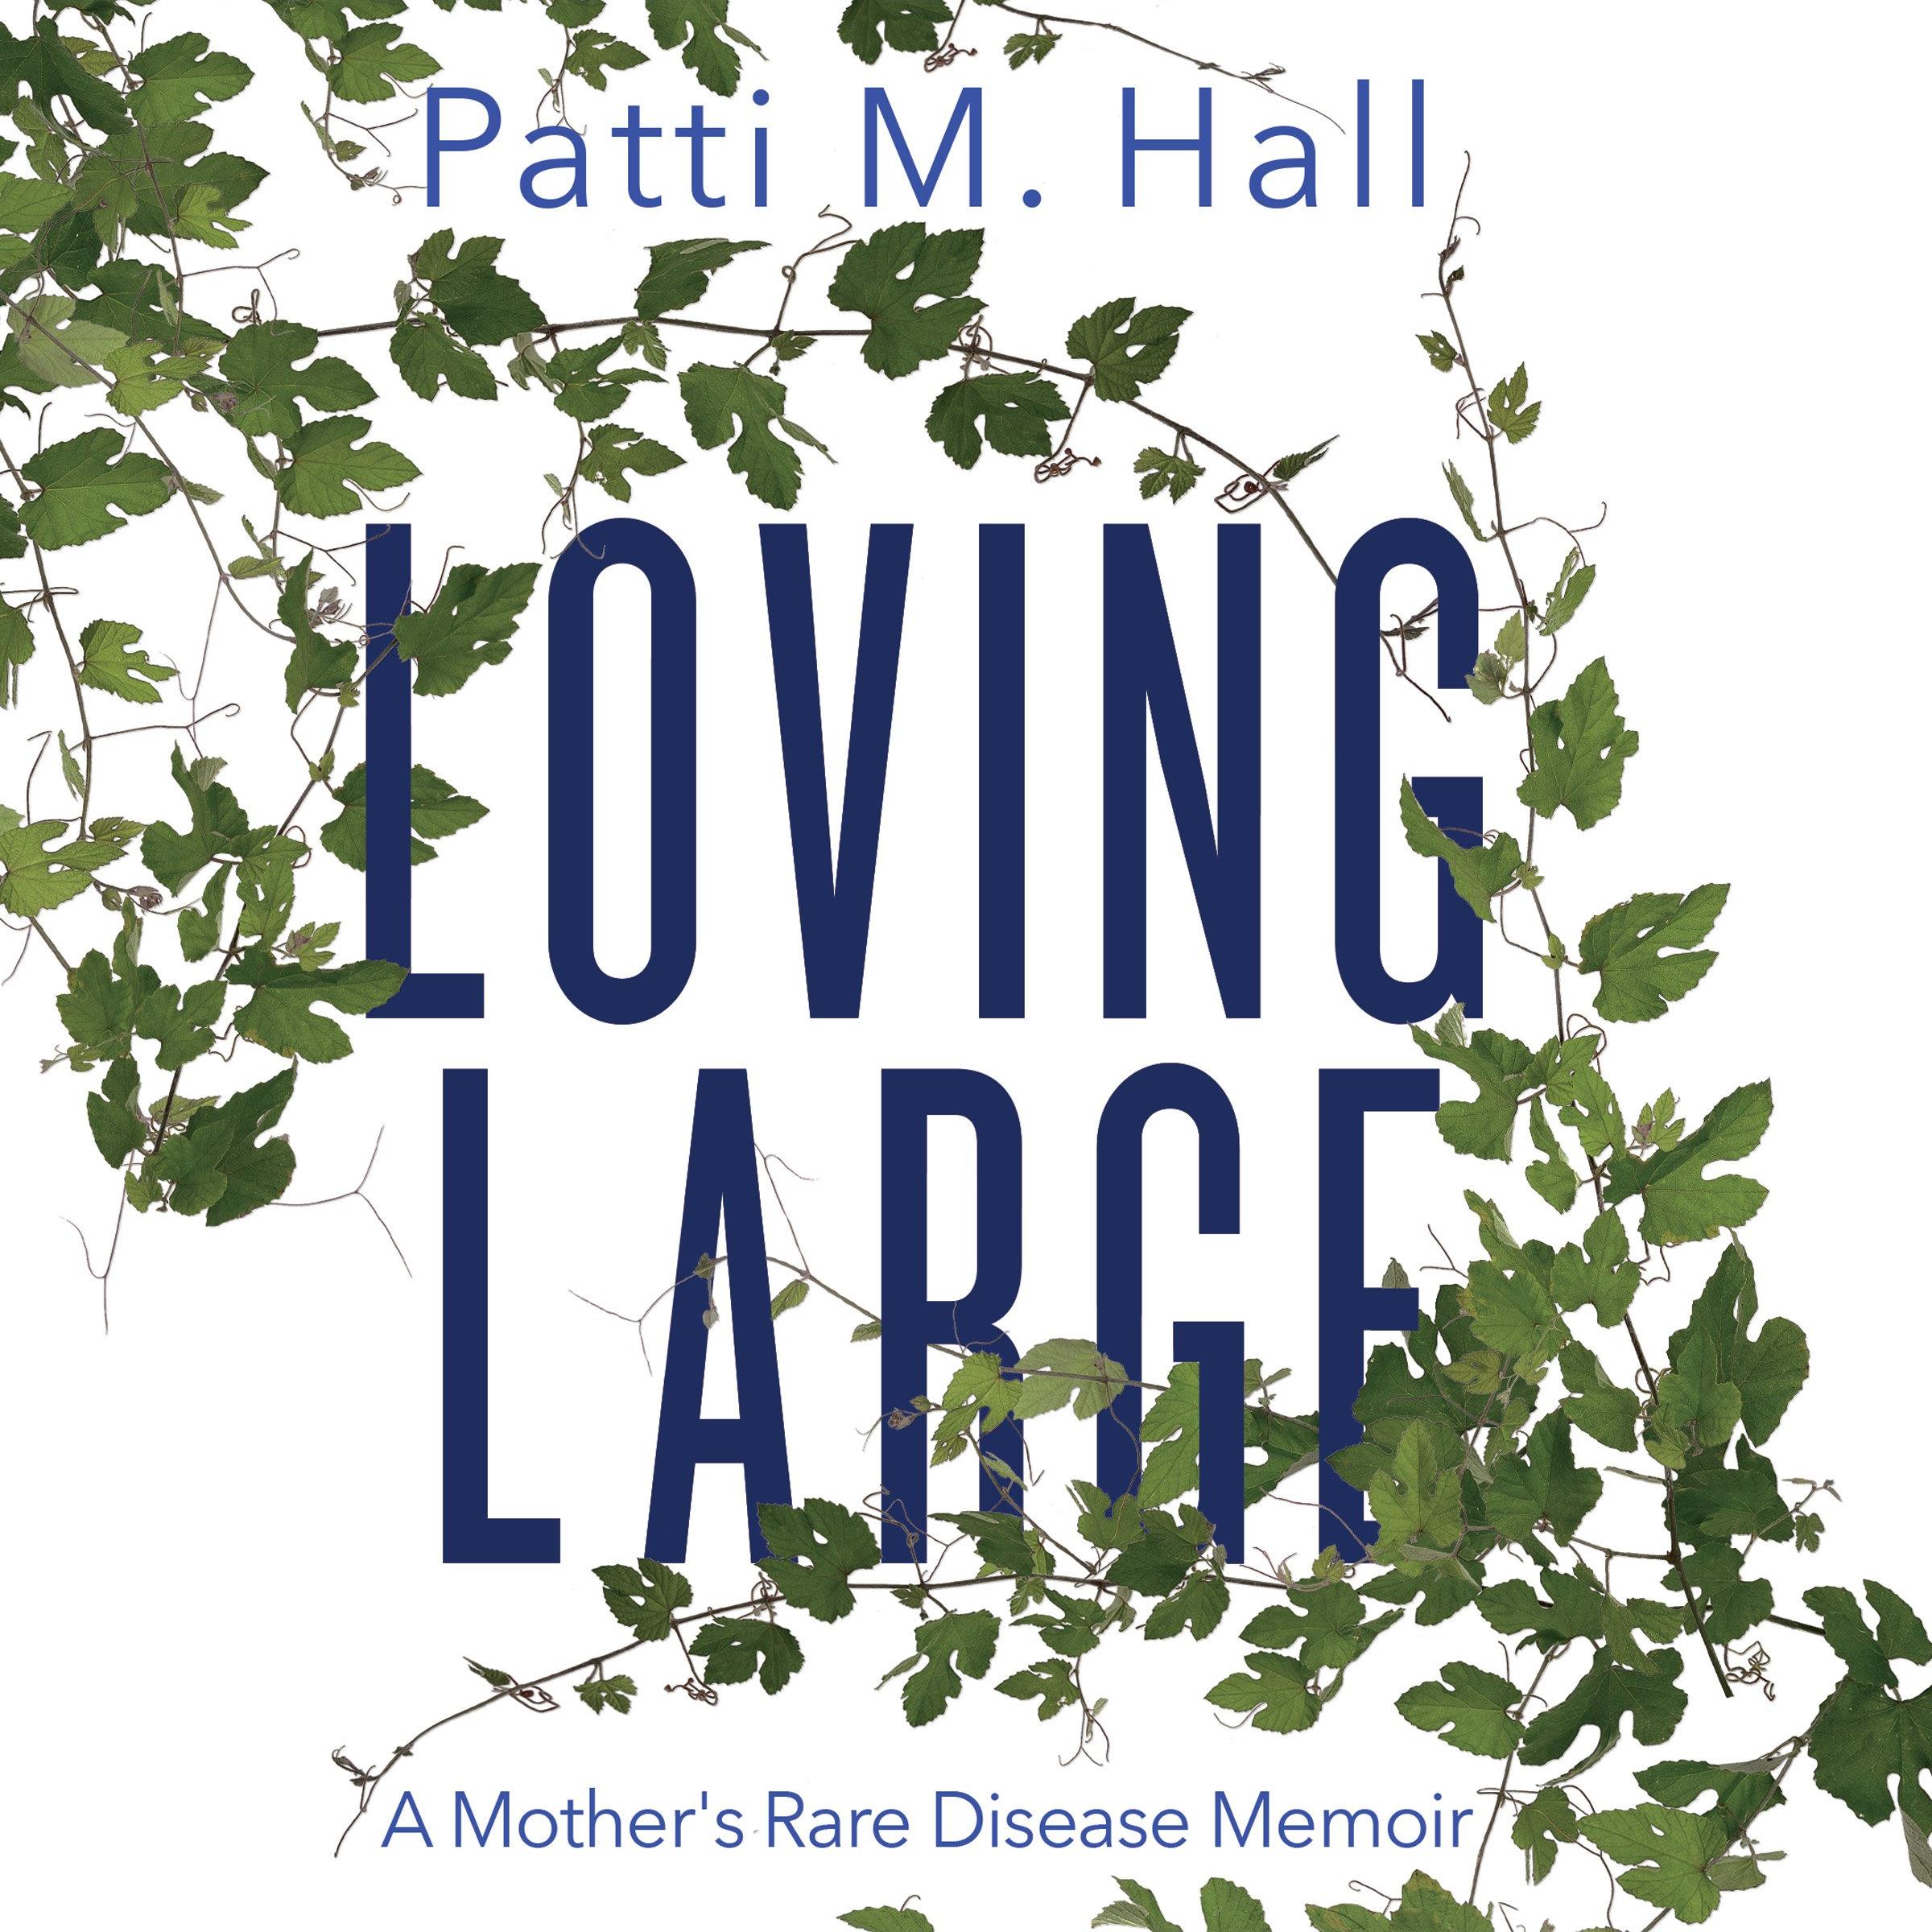 Loving hall. Patty m Hall loving. Loving large Patti m Hall о чем книга.